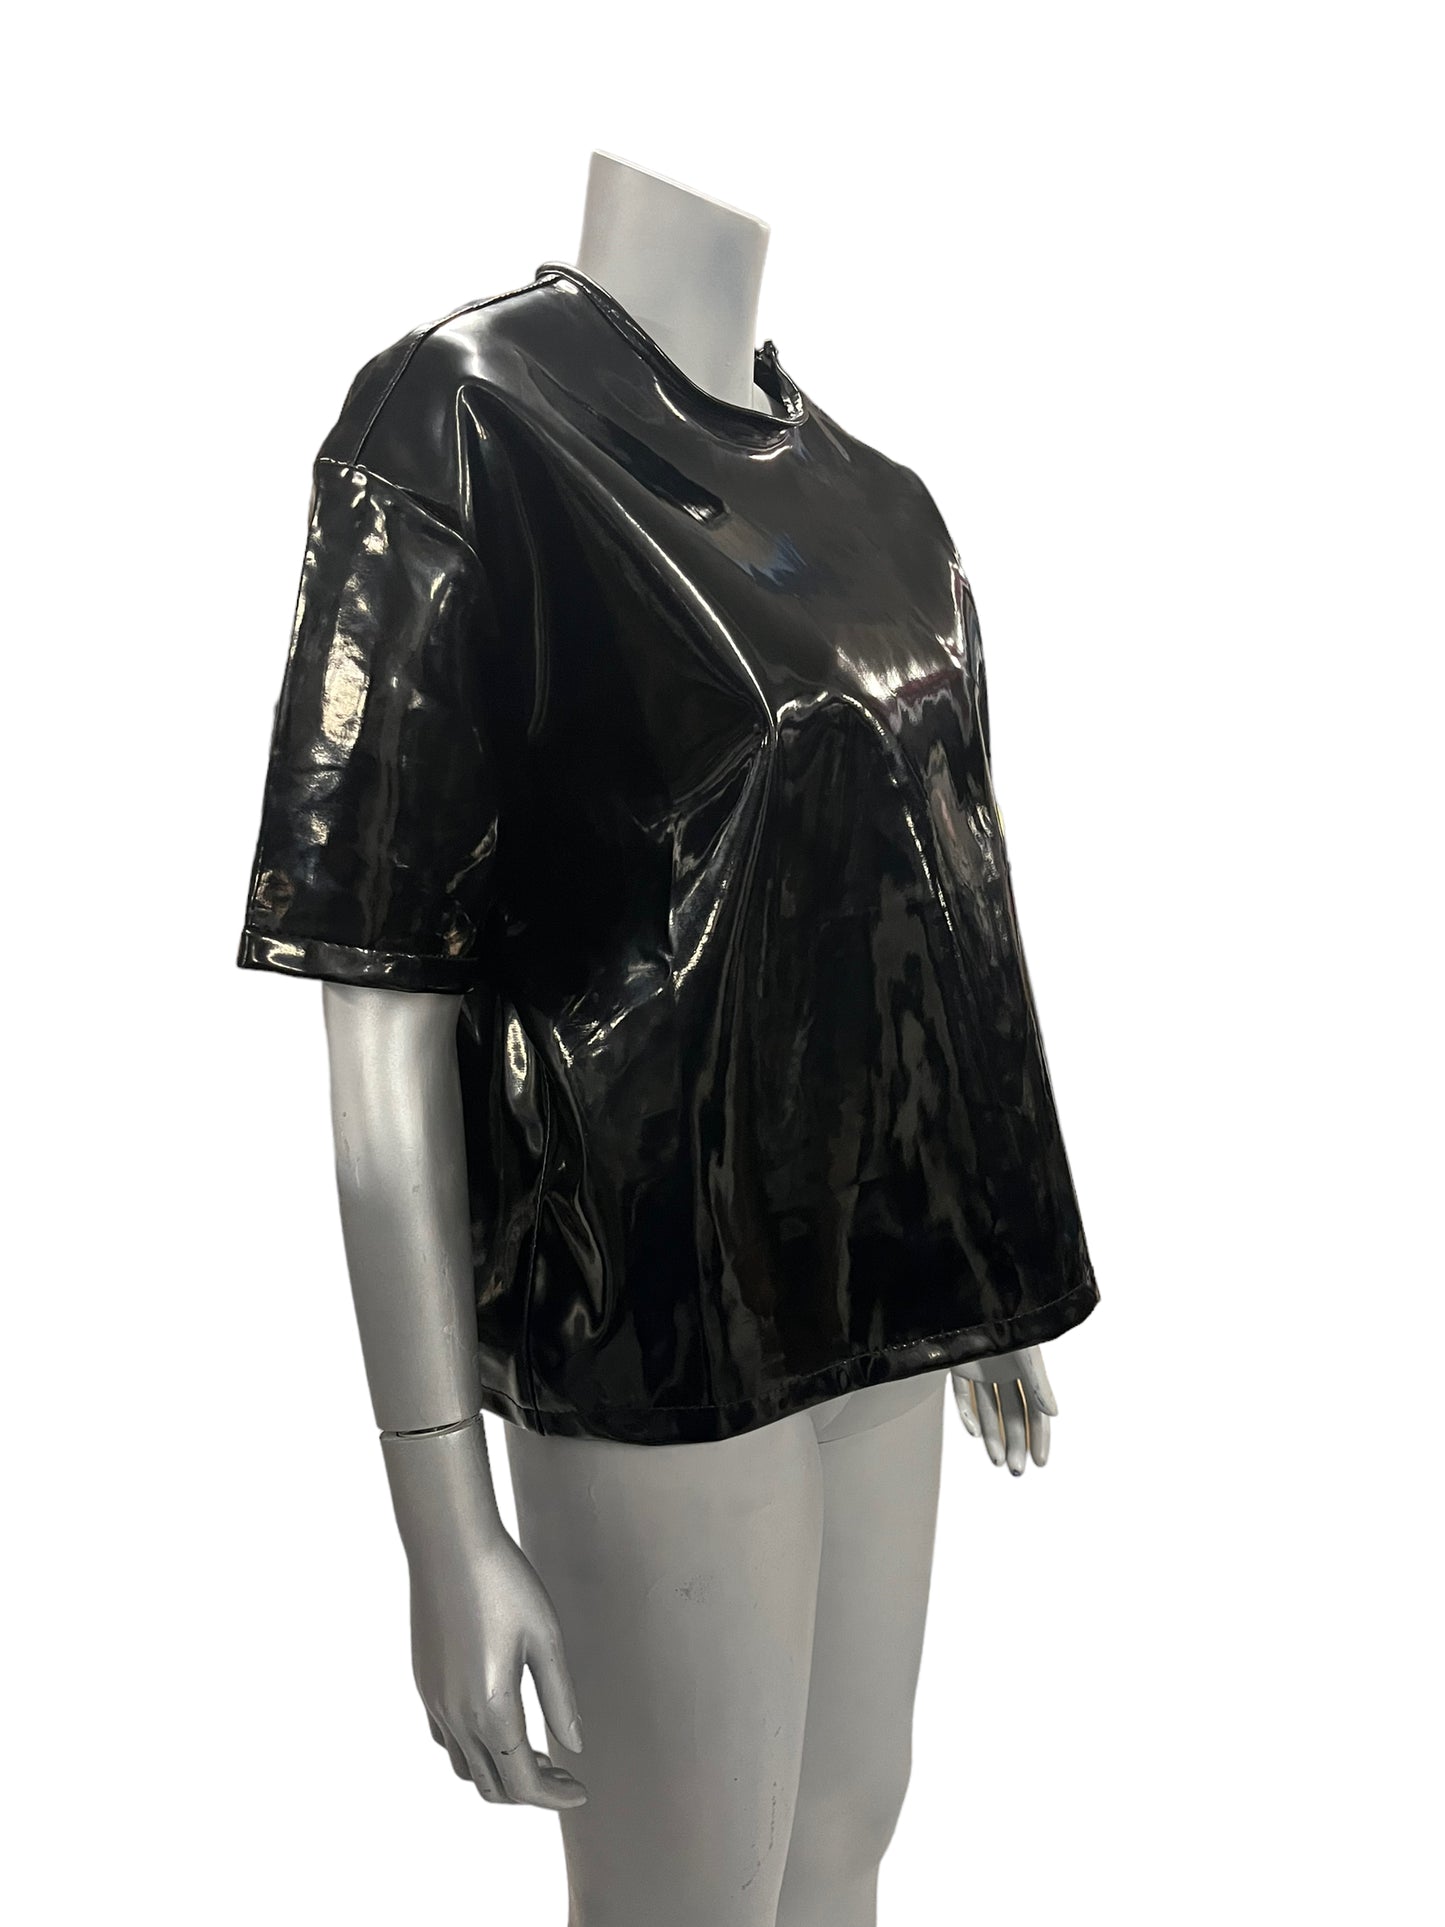 Fashion World - LL114 - Black Shirt With Side Zipper - Size XL